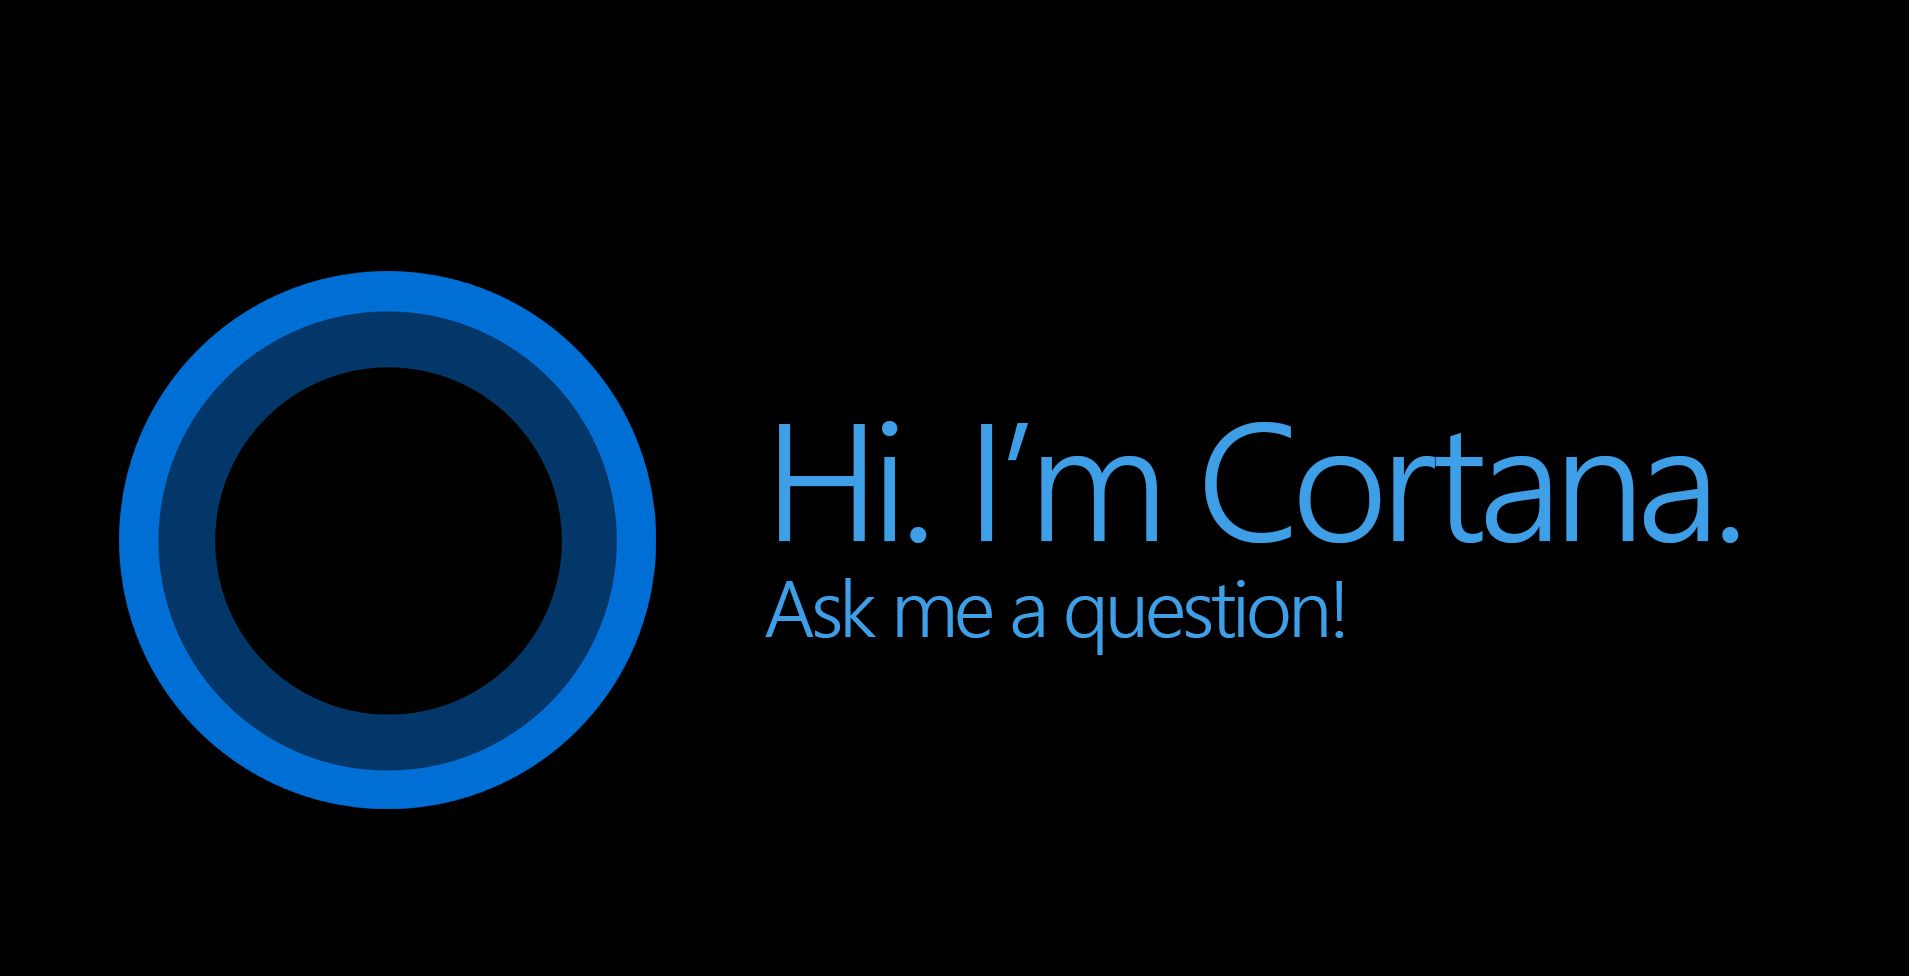 Cortana privacy concerns